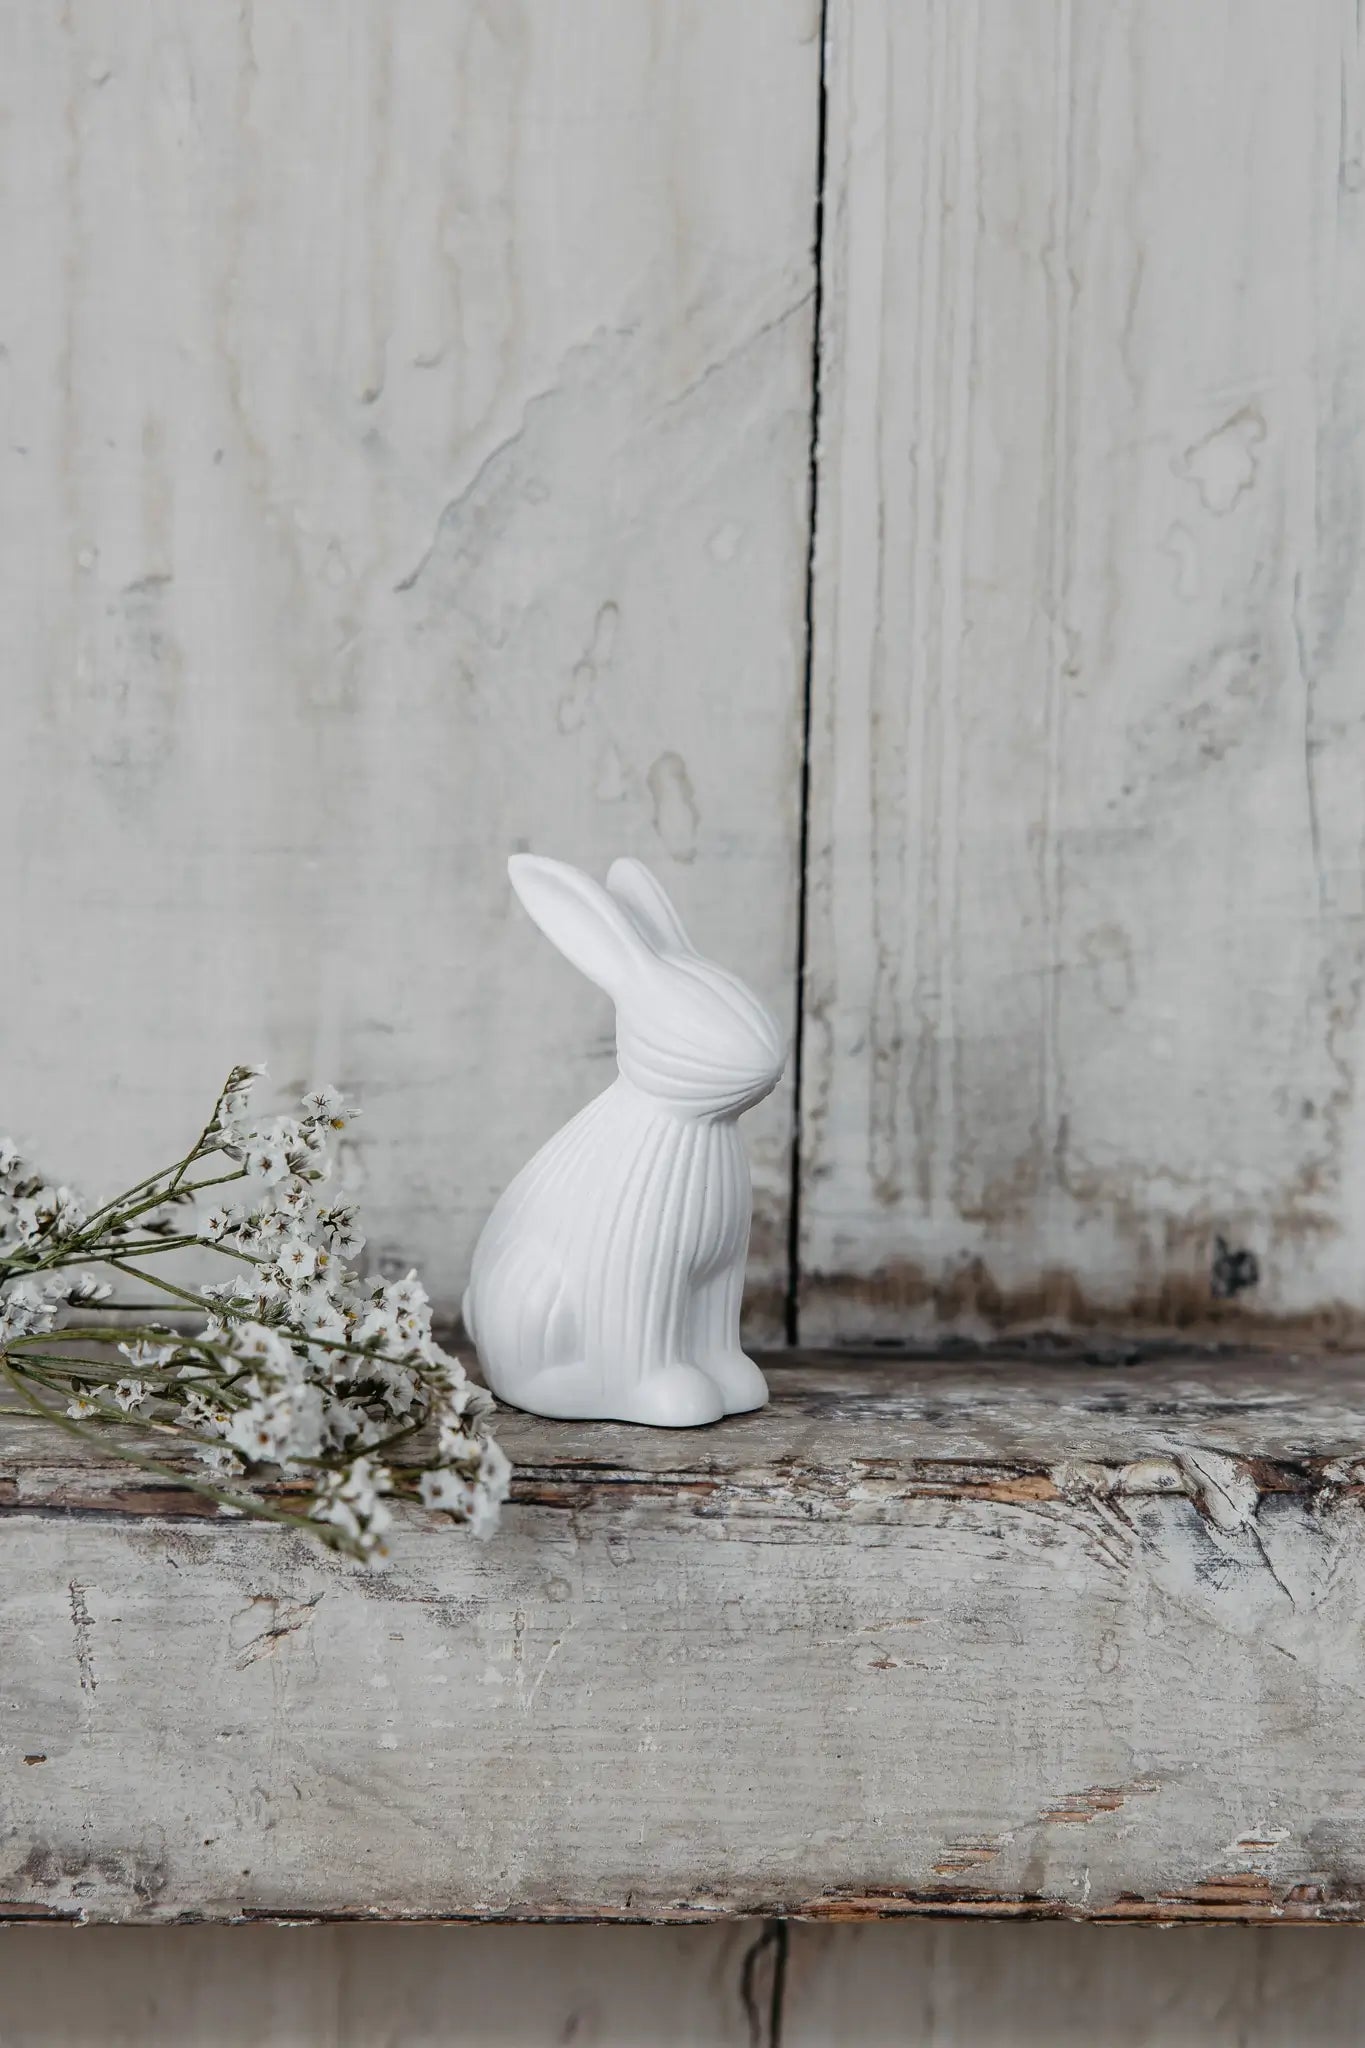 Large Rabbit - Arthur | White | Ceramic | by Storefactory - Lifestory